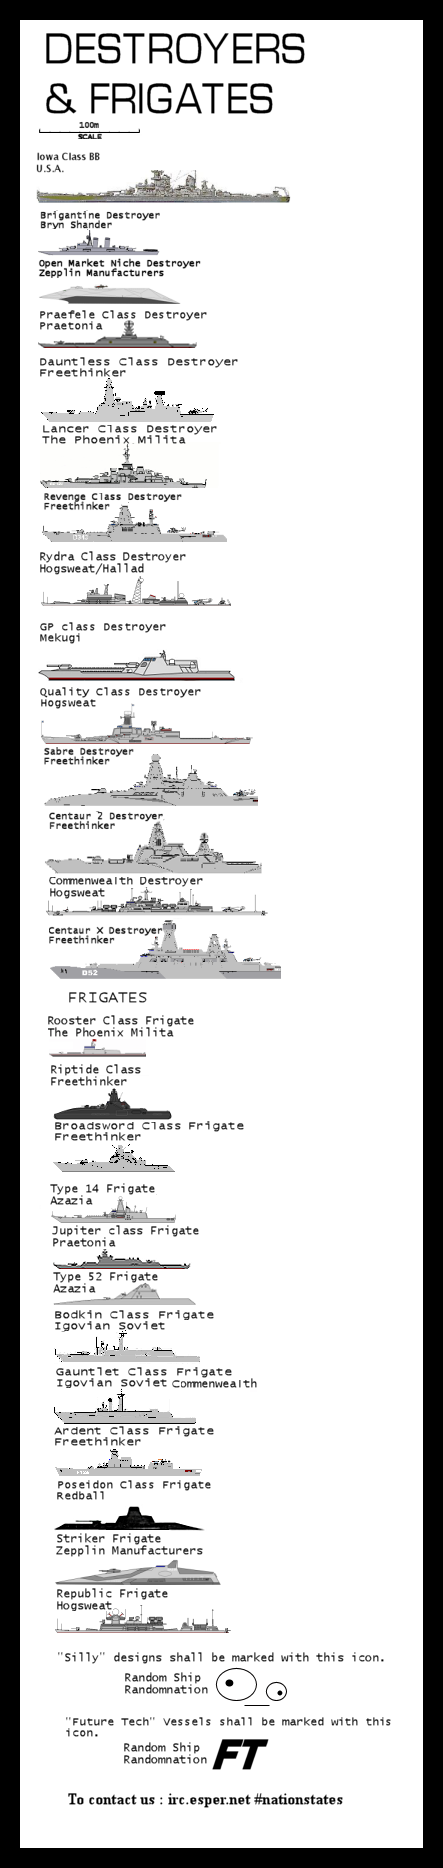 Destroyers_and_frigates_V25_by_Doc_Evilonavich.png